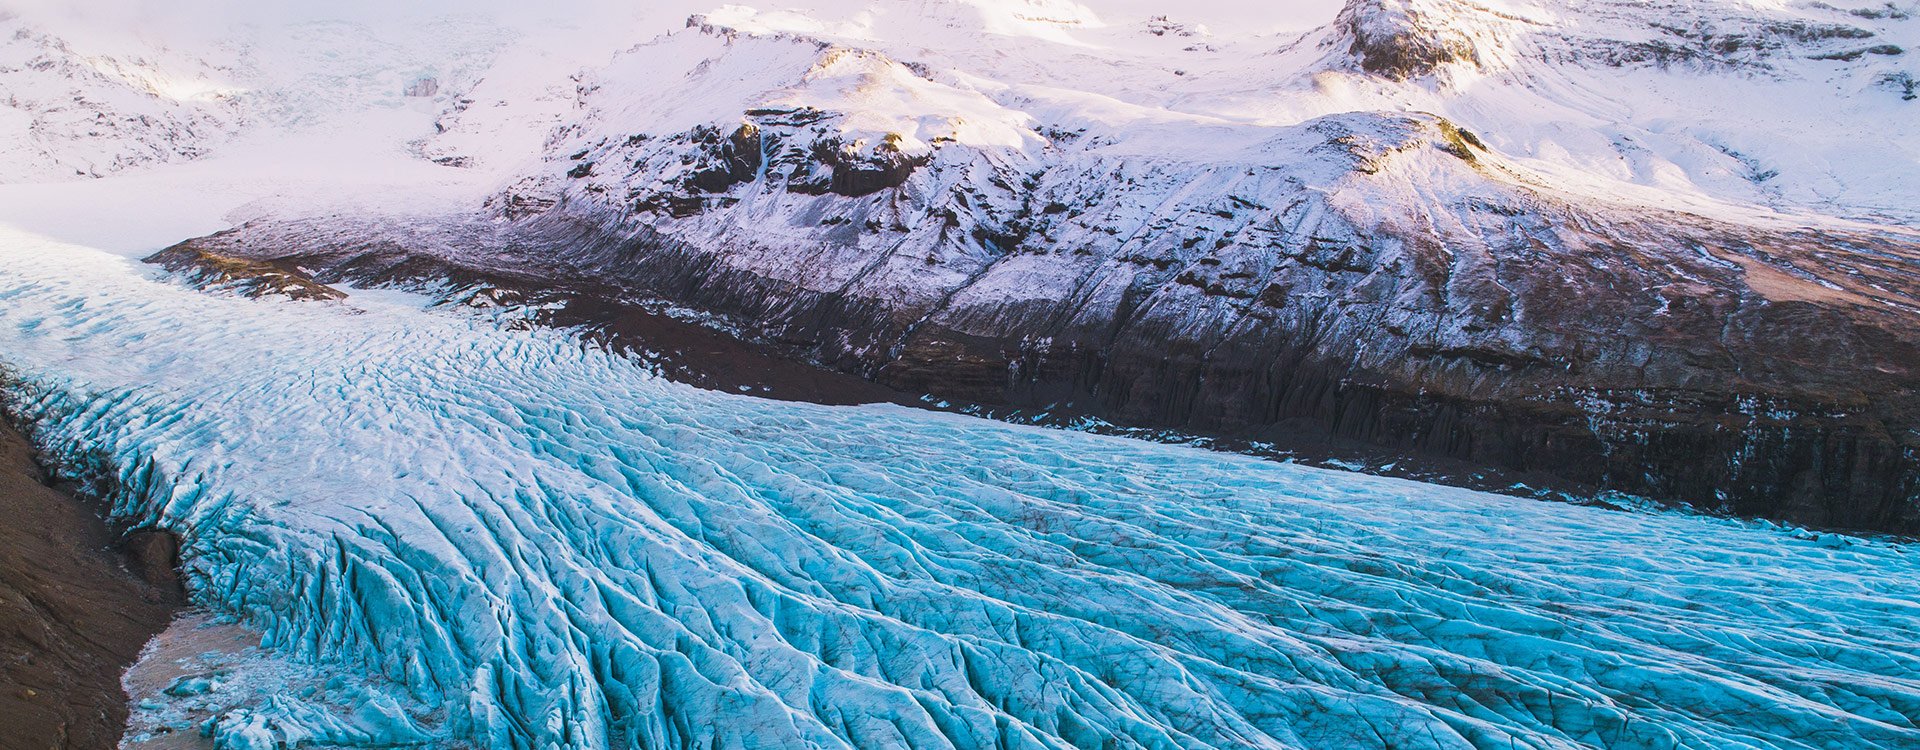 South Iceland_Vatnajokull Glacier